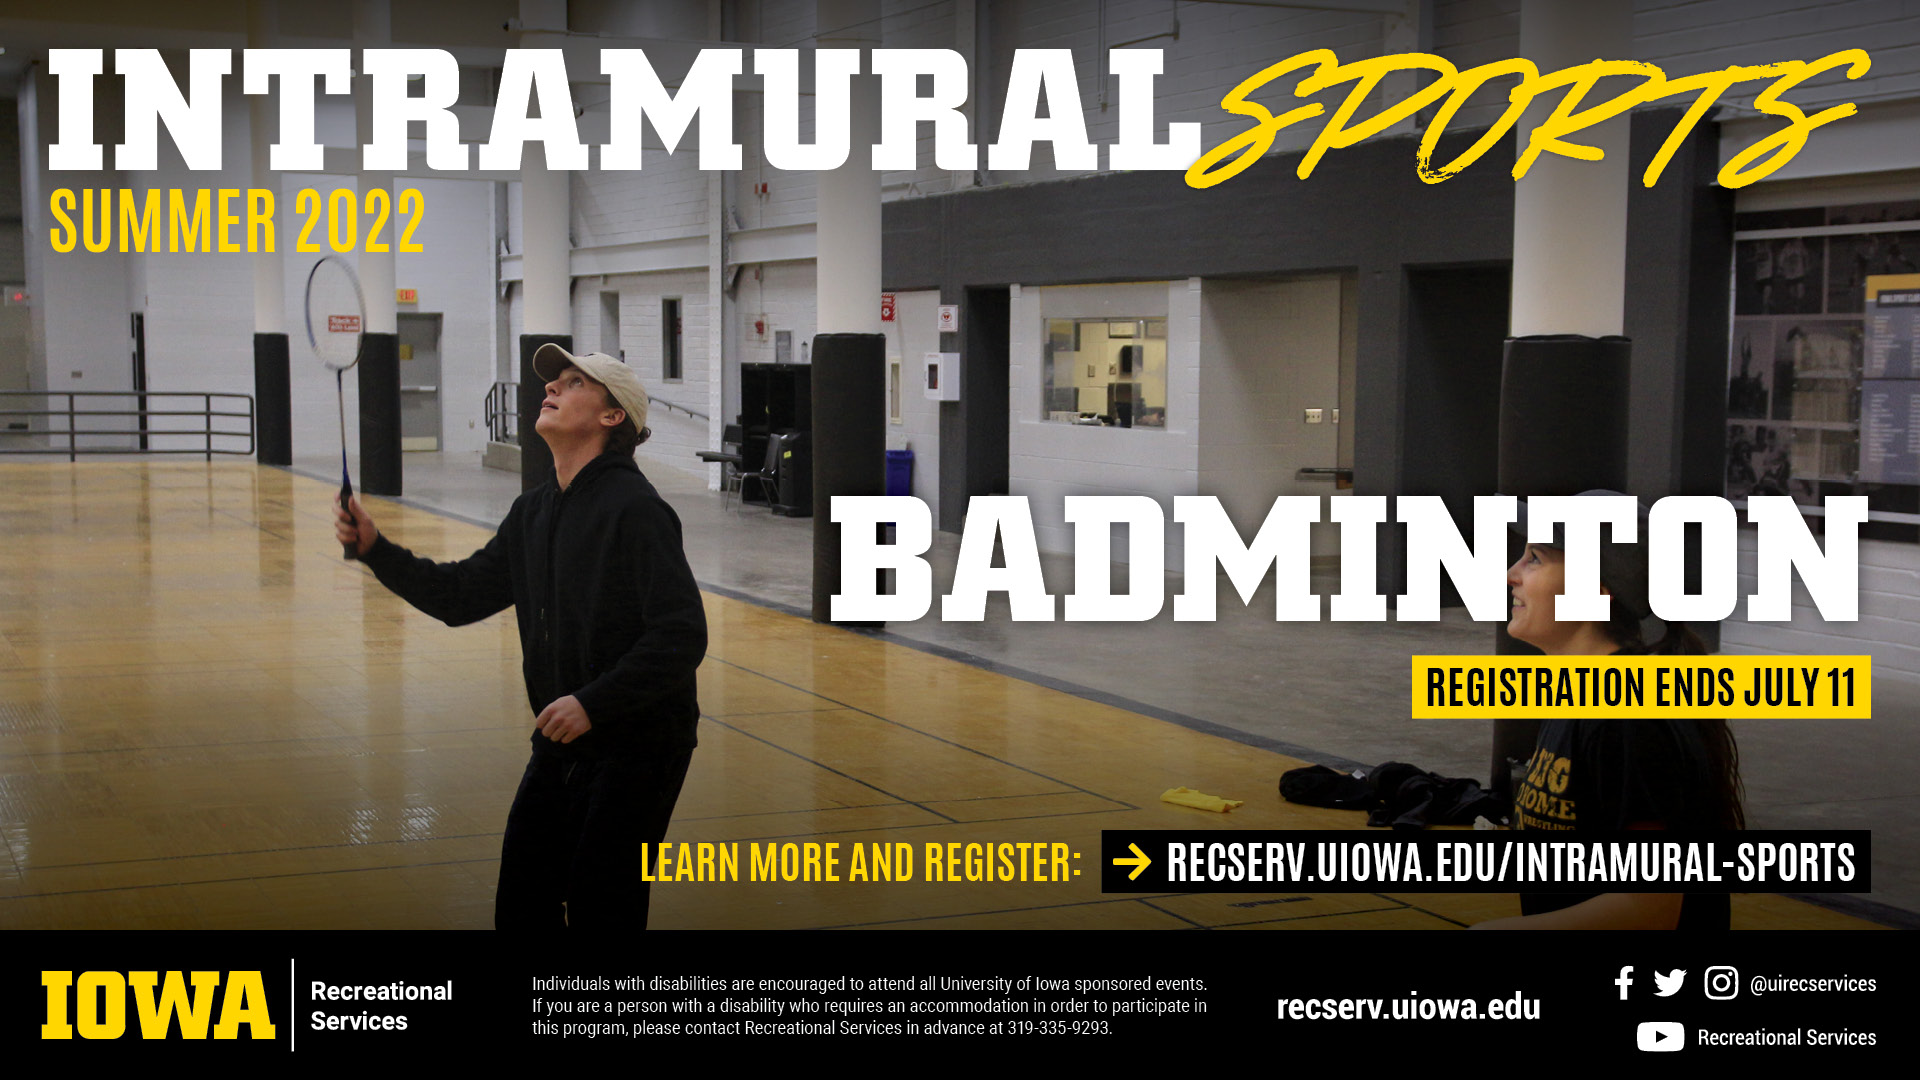 Summer 2022 Intramural Sports Badminton. Registration ends July 11. Learn more and register: recserv.uiowa.edu/intramural-sports